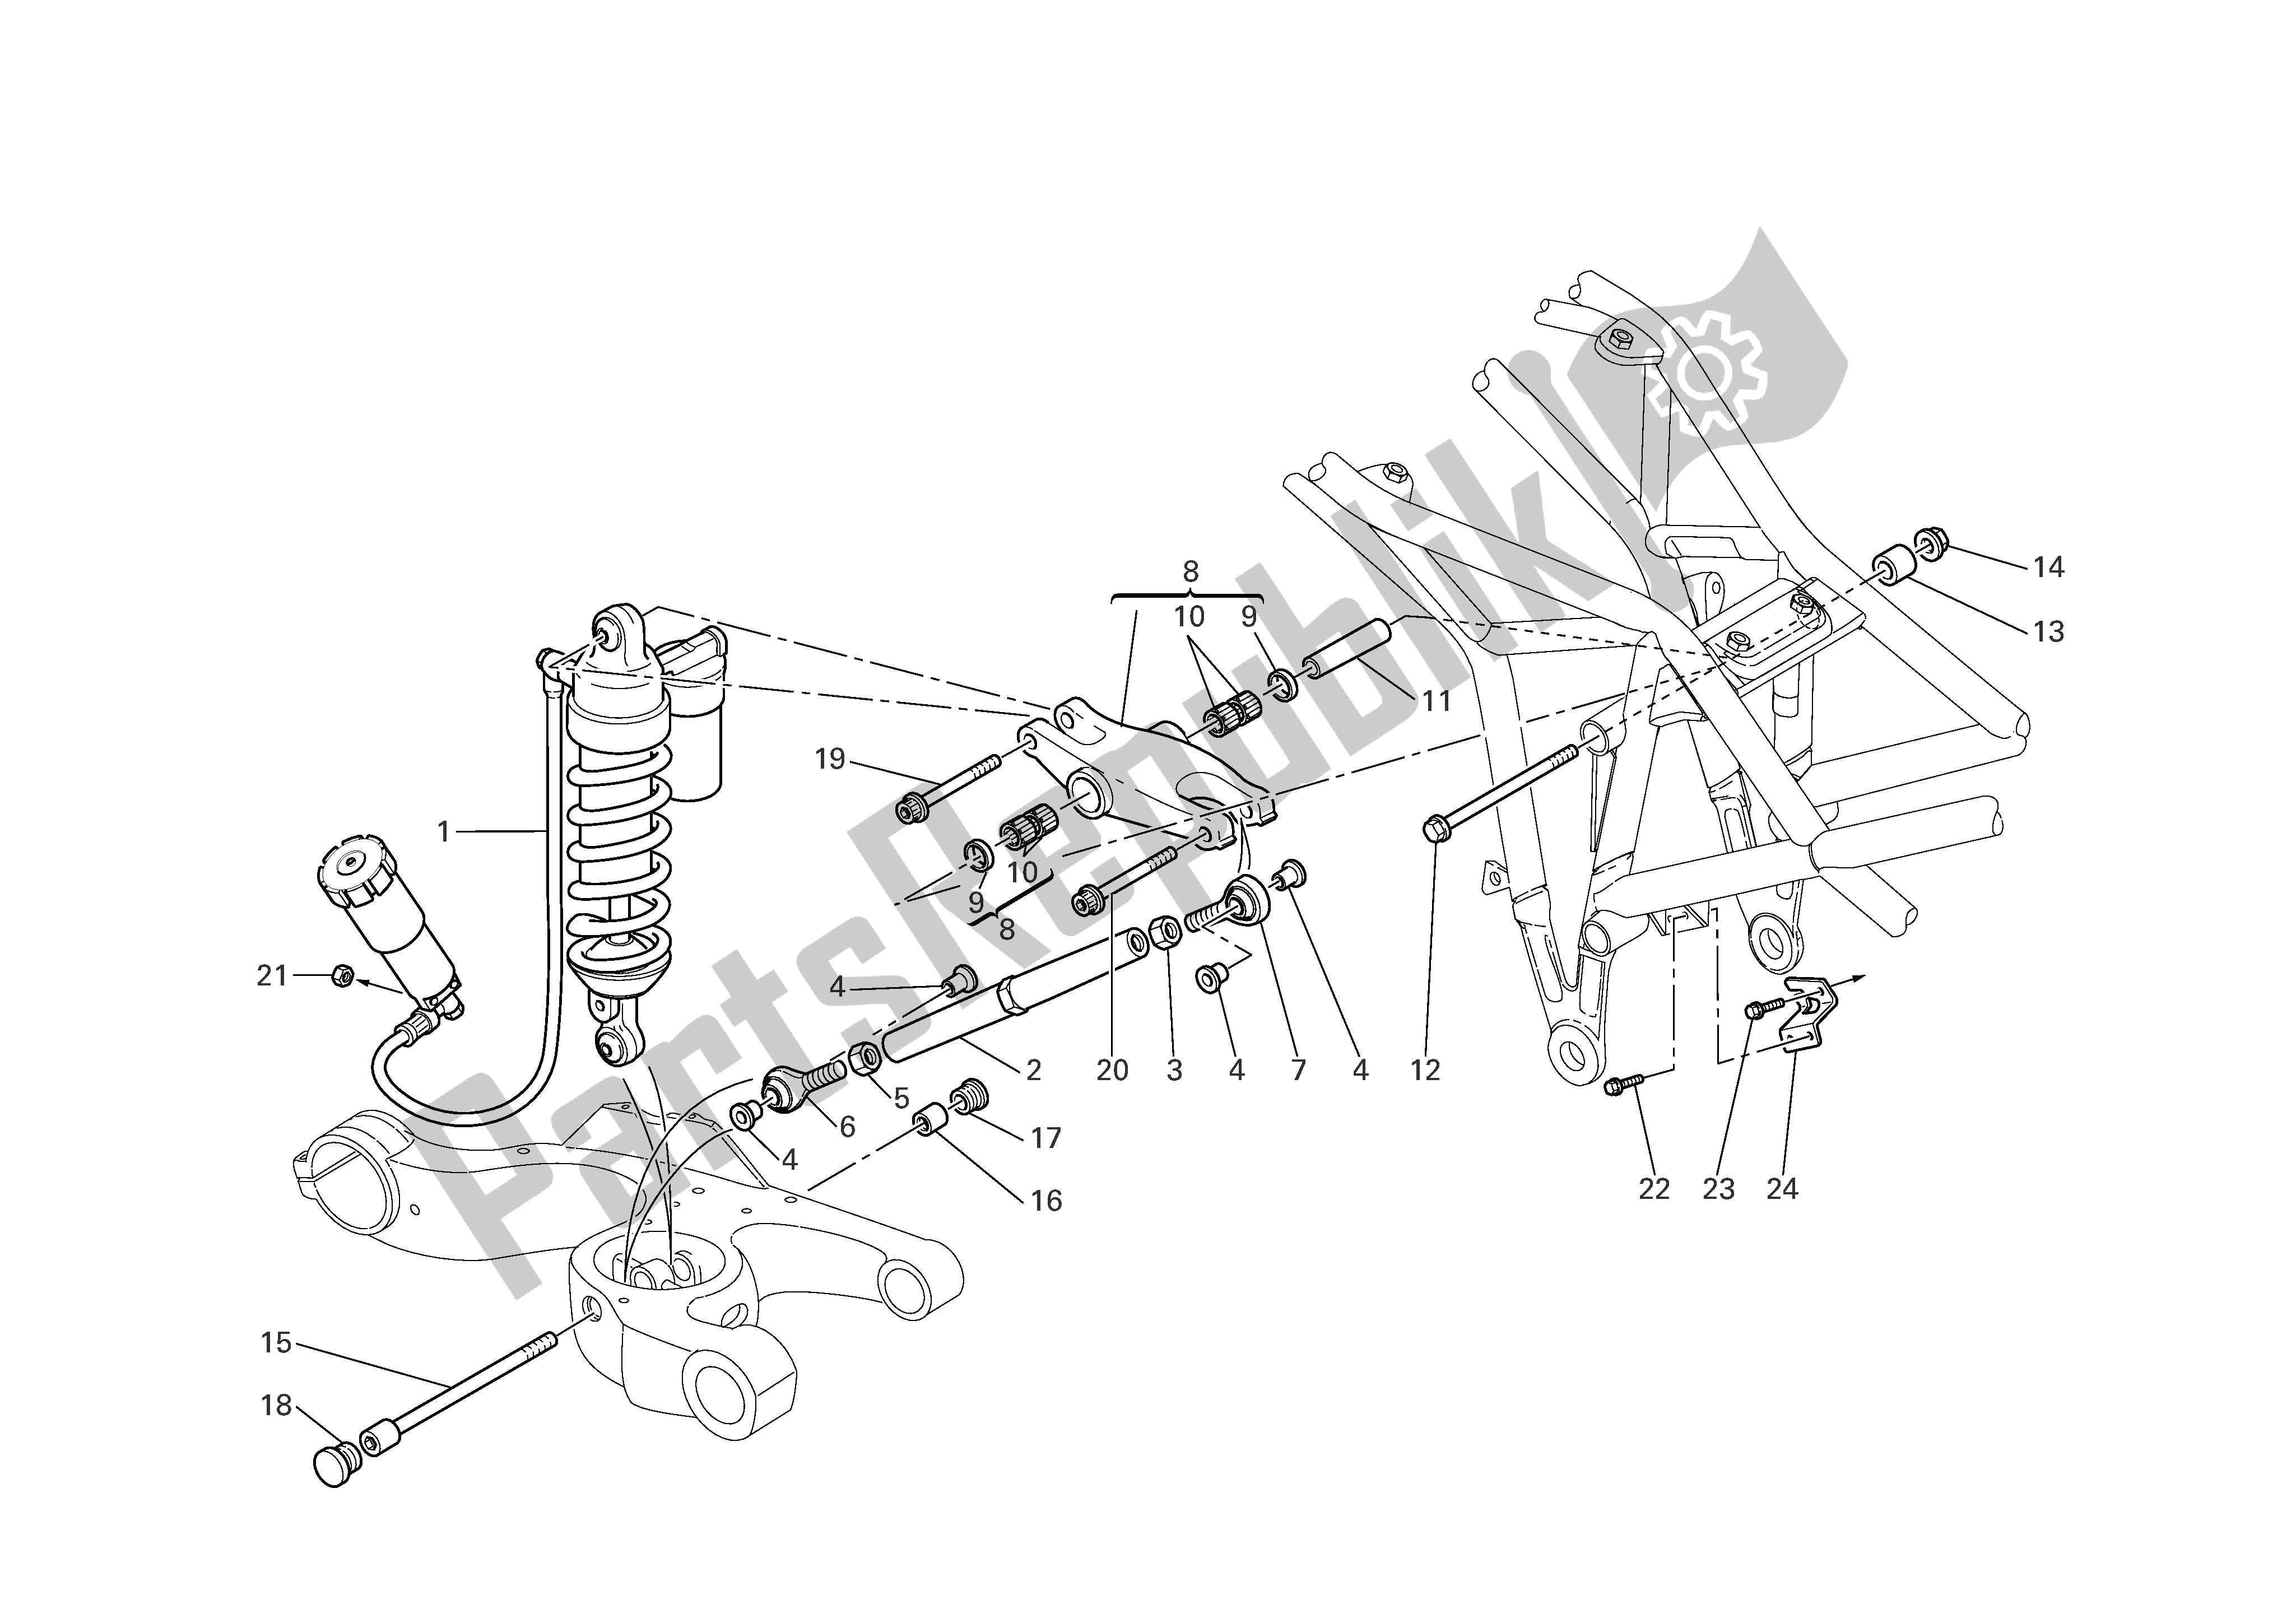 All parts for the Rear Suspension of the Ducati Multistrada 1000 2005